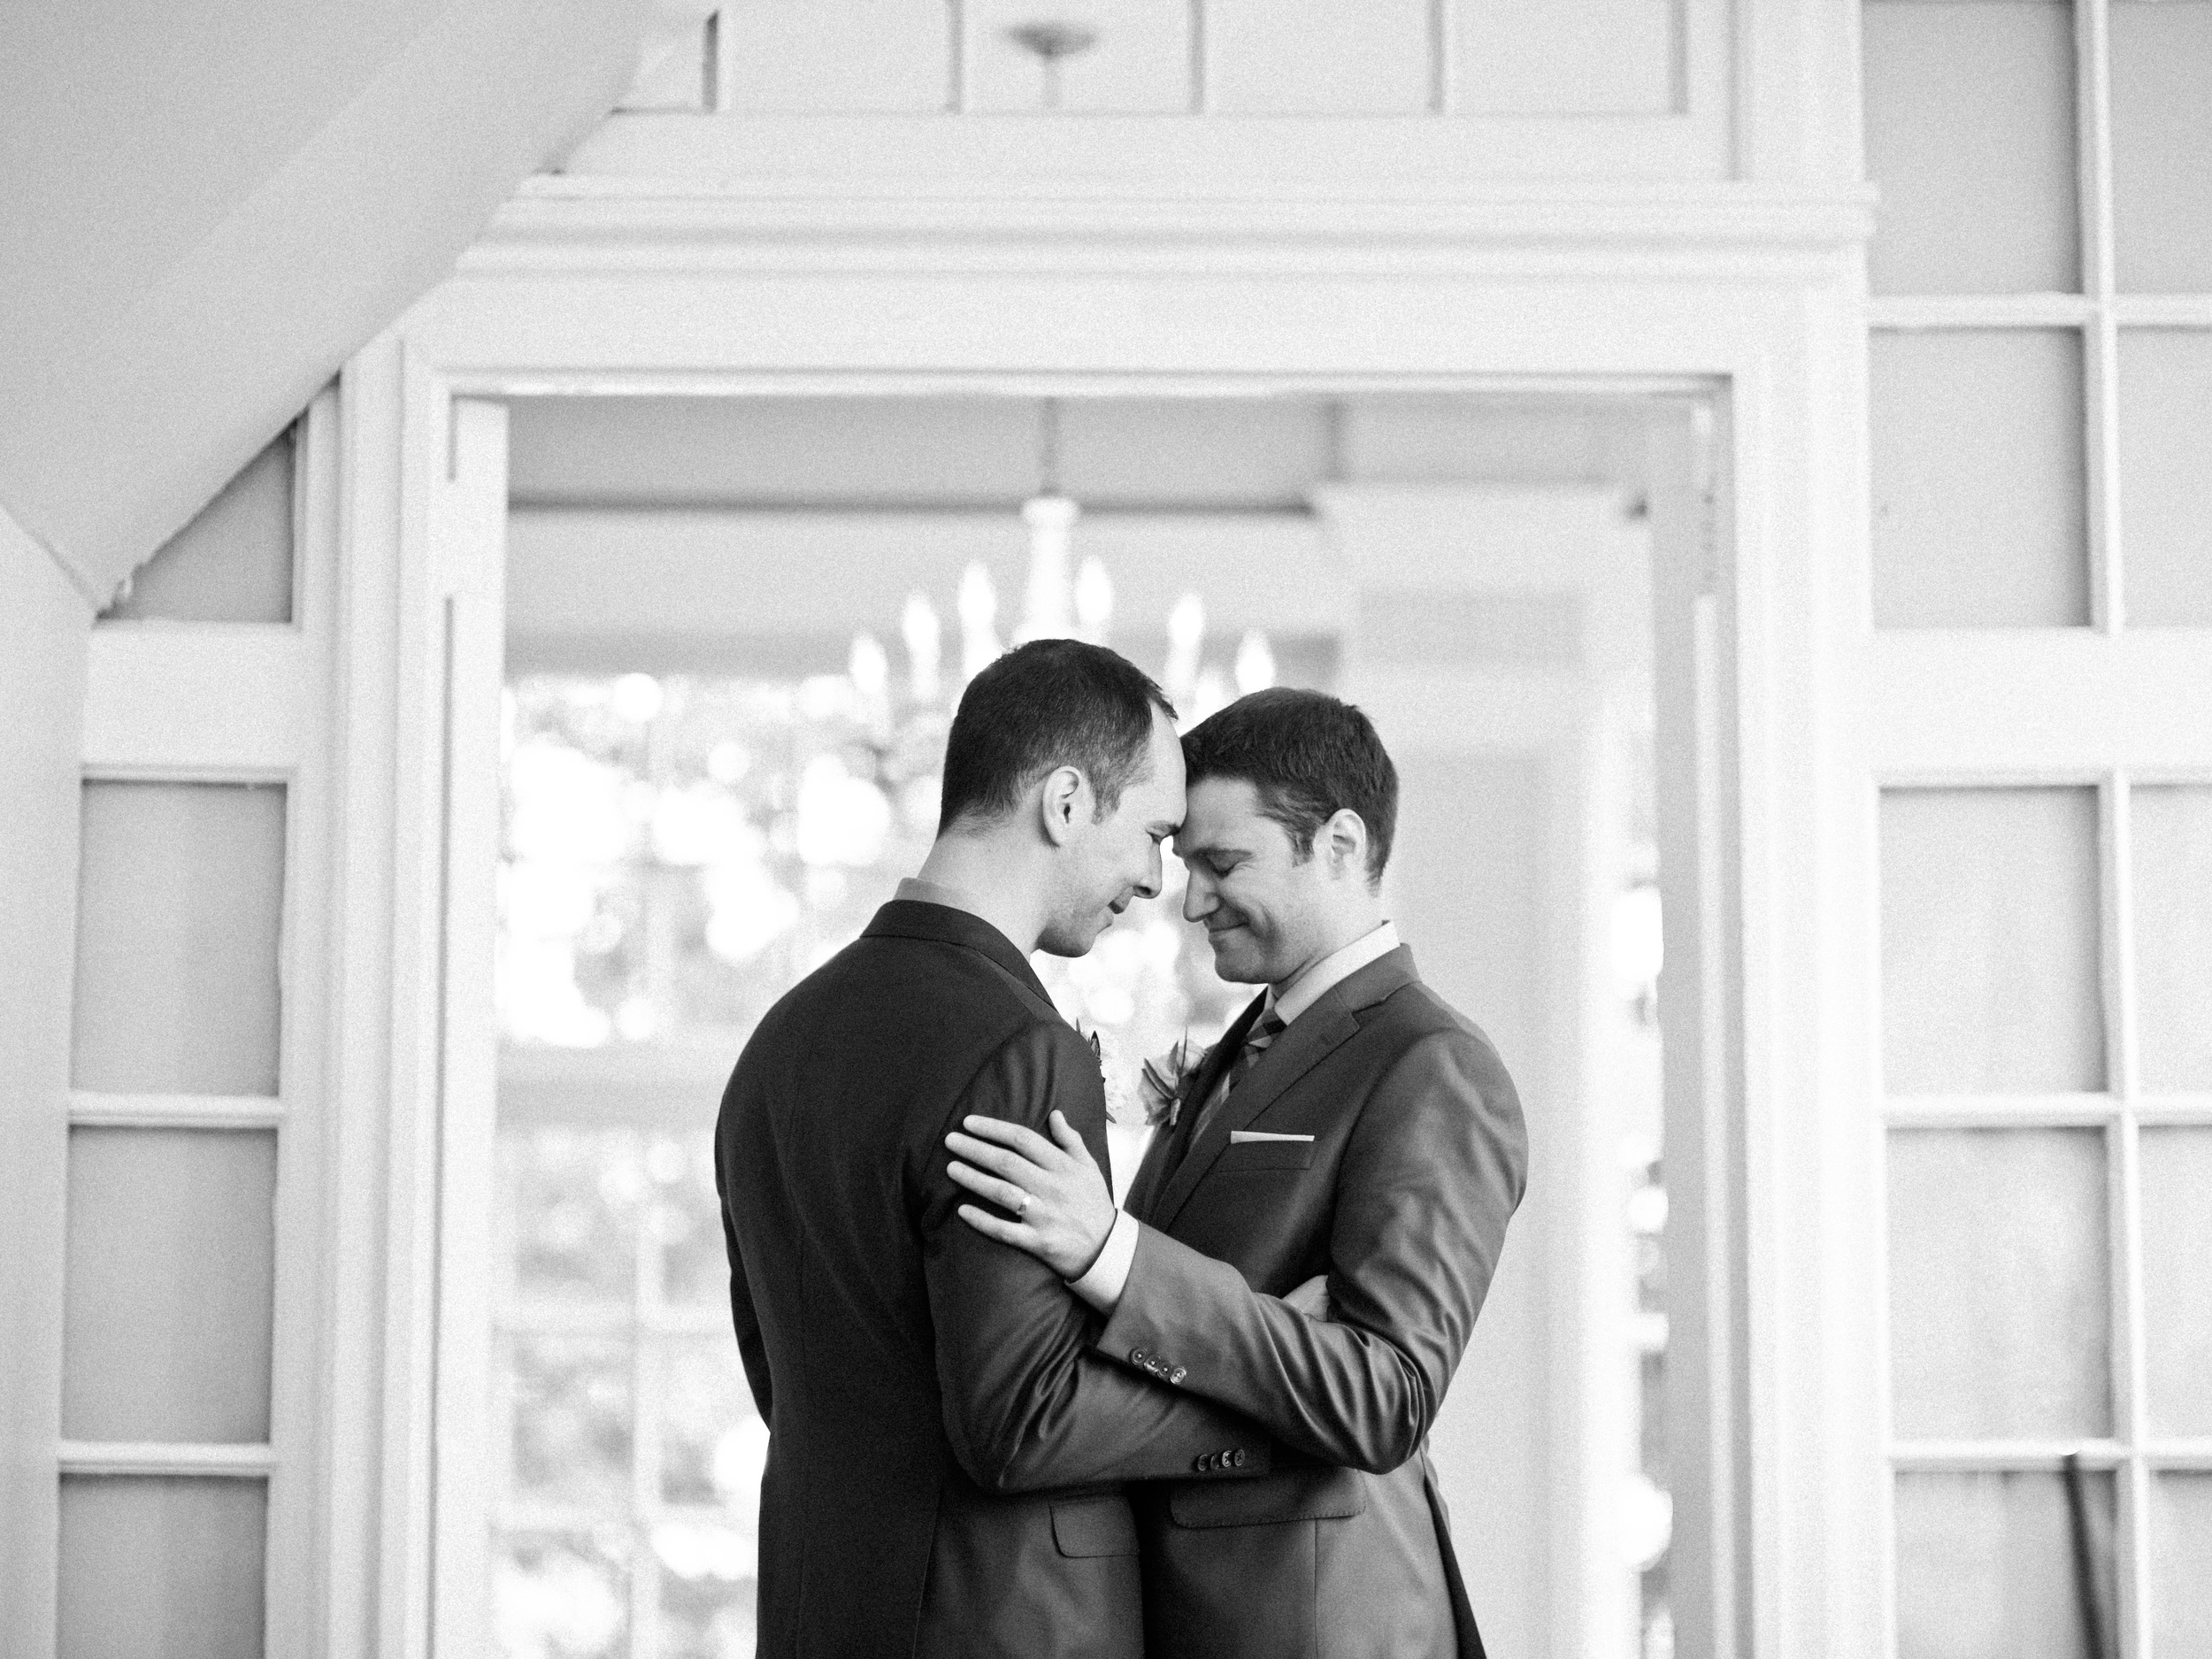 Toronto island wedding ceremony - same sex wedding 